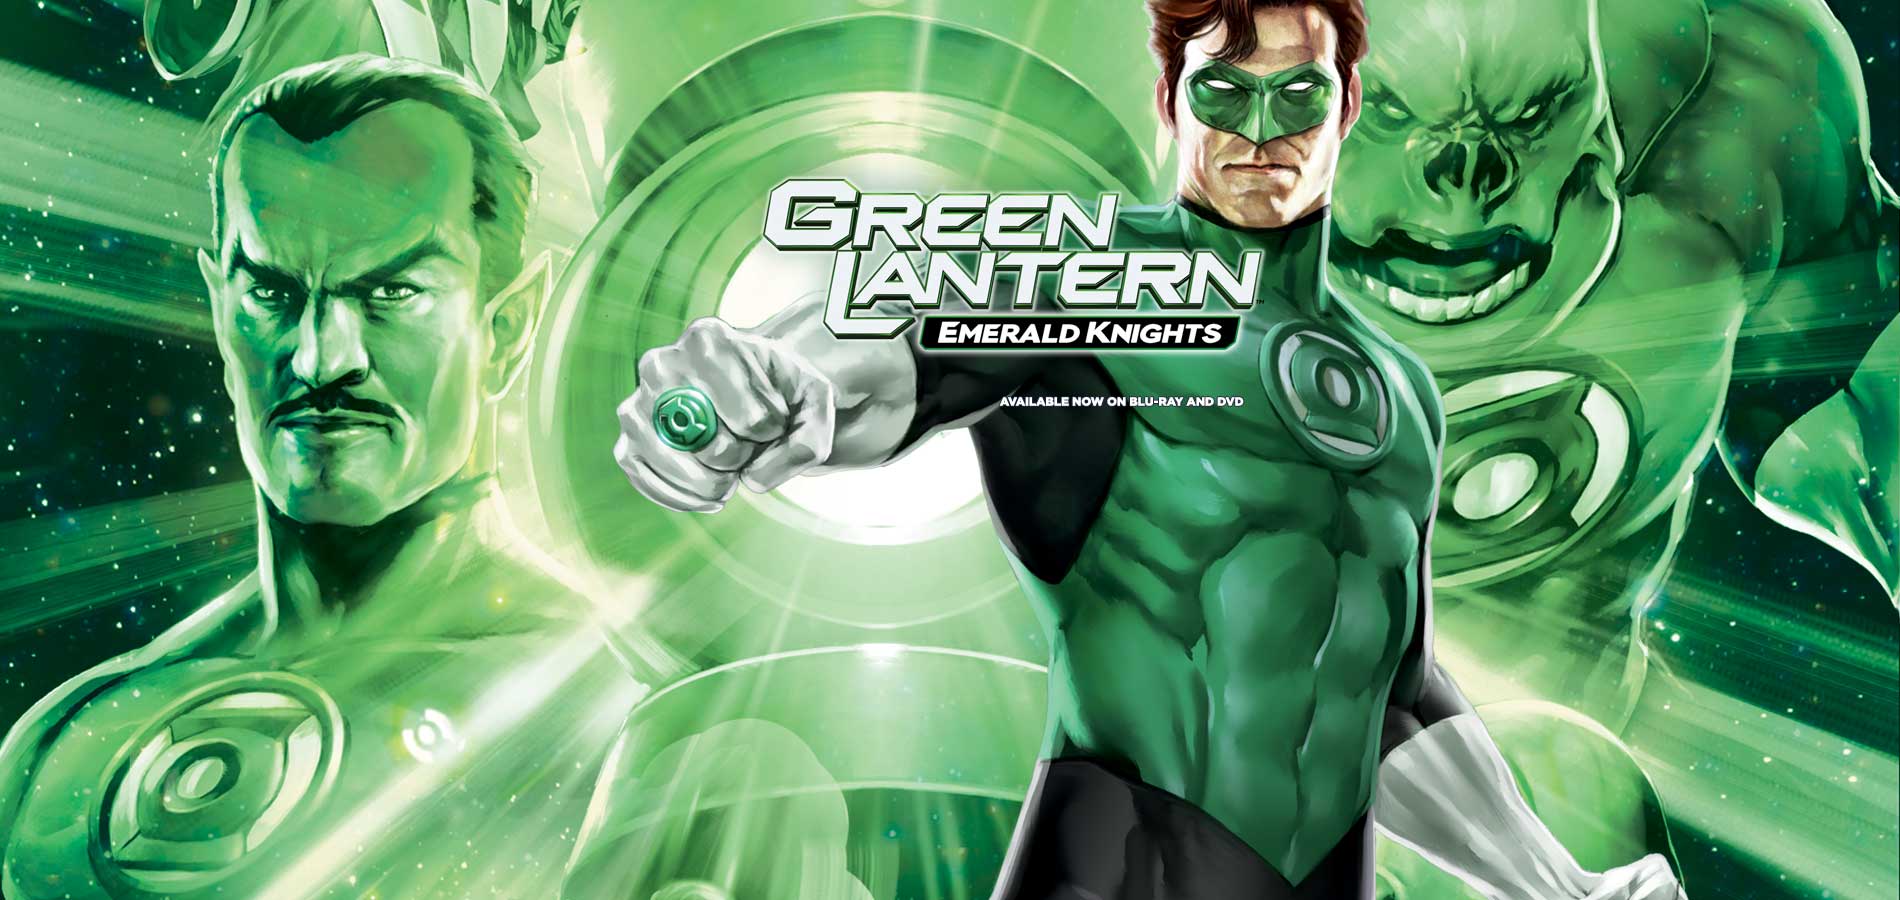 HQ Green Lantern: Emerald Knights Wallpapers | File 161.51Kb